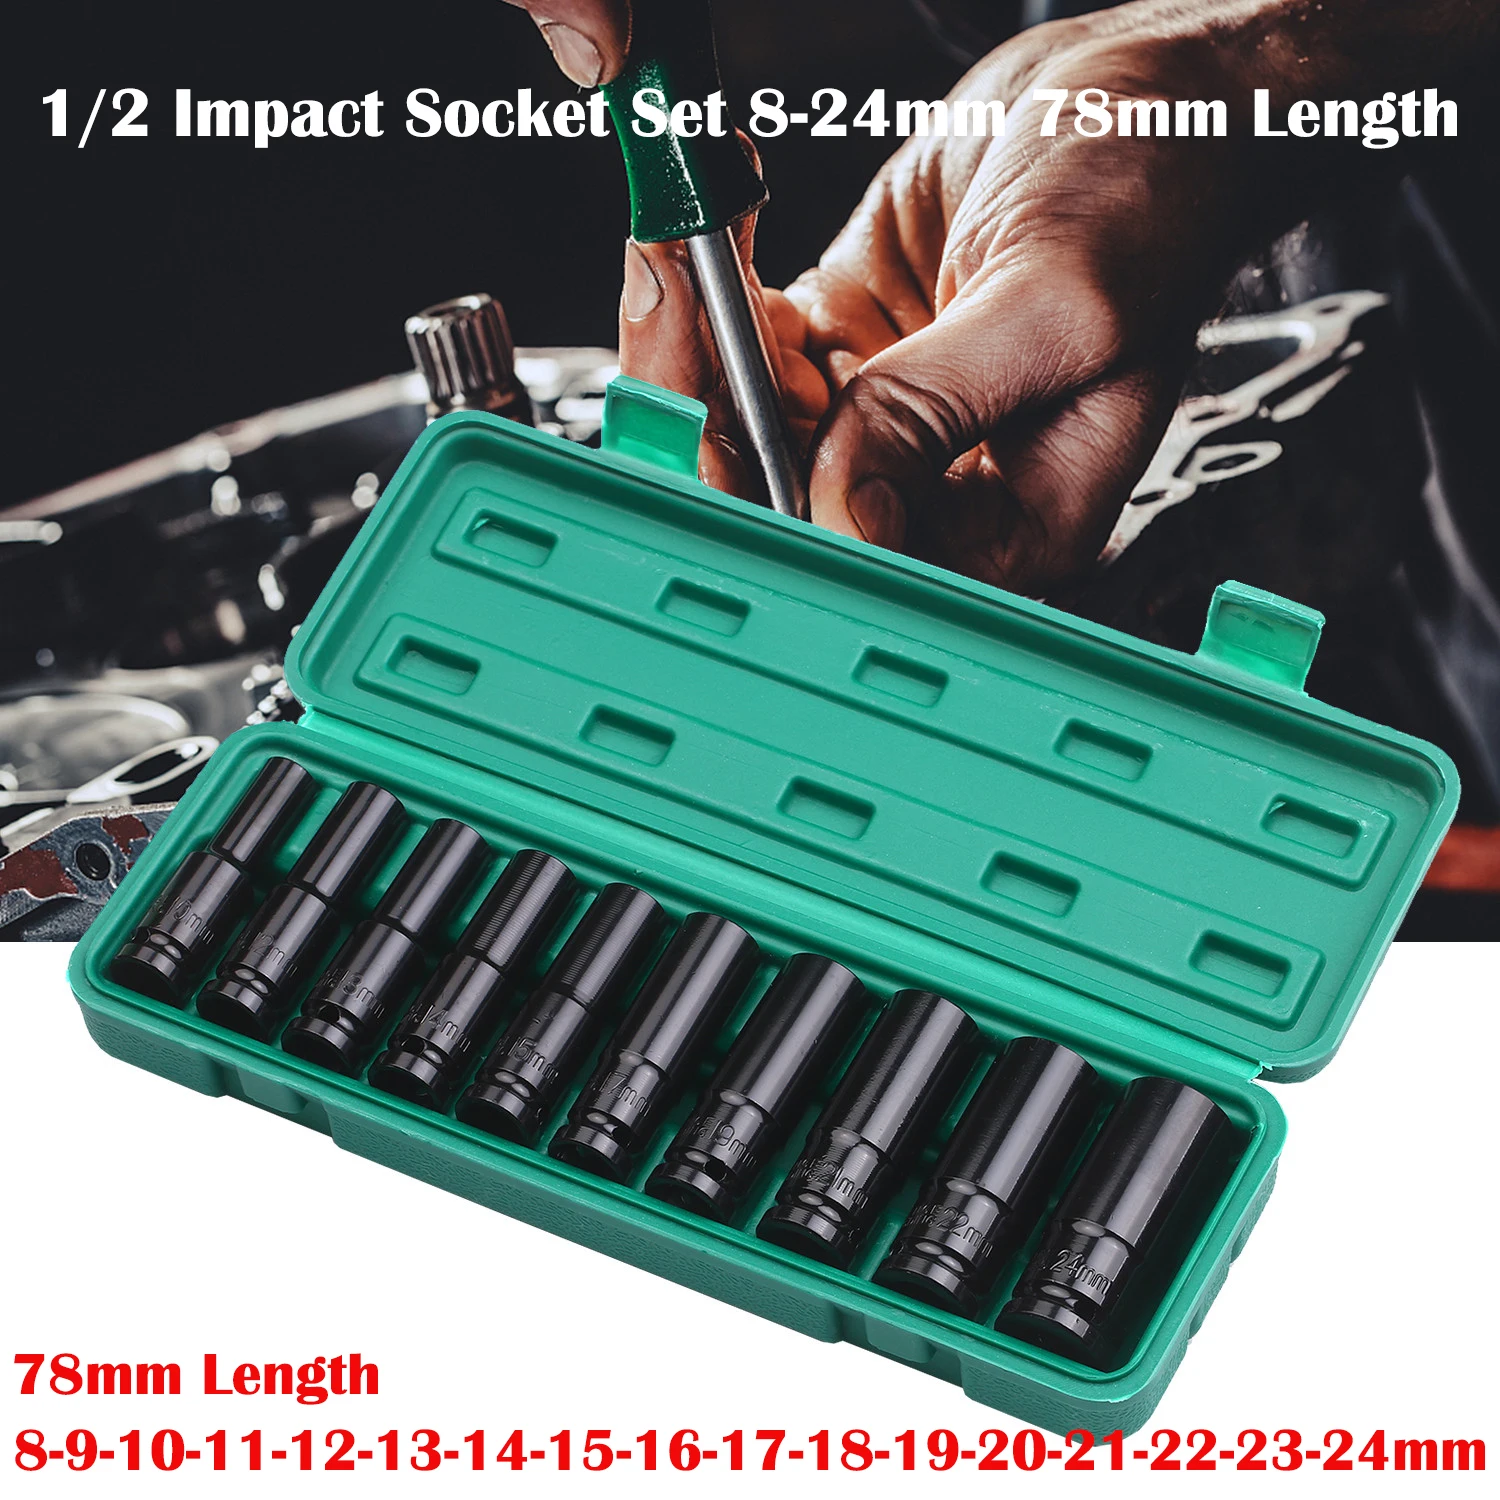 

10PCS Impact Socket Set 1/2 Drive Hex 8-24mm Spanner Deep Socket Key Long Pneumatic Wrench Head Mechanical Workshop Tools Garage